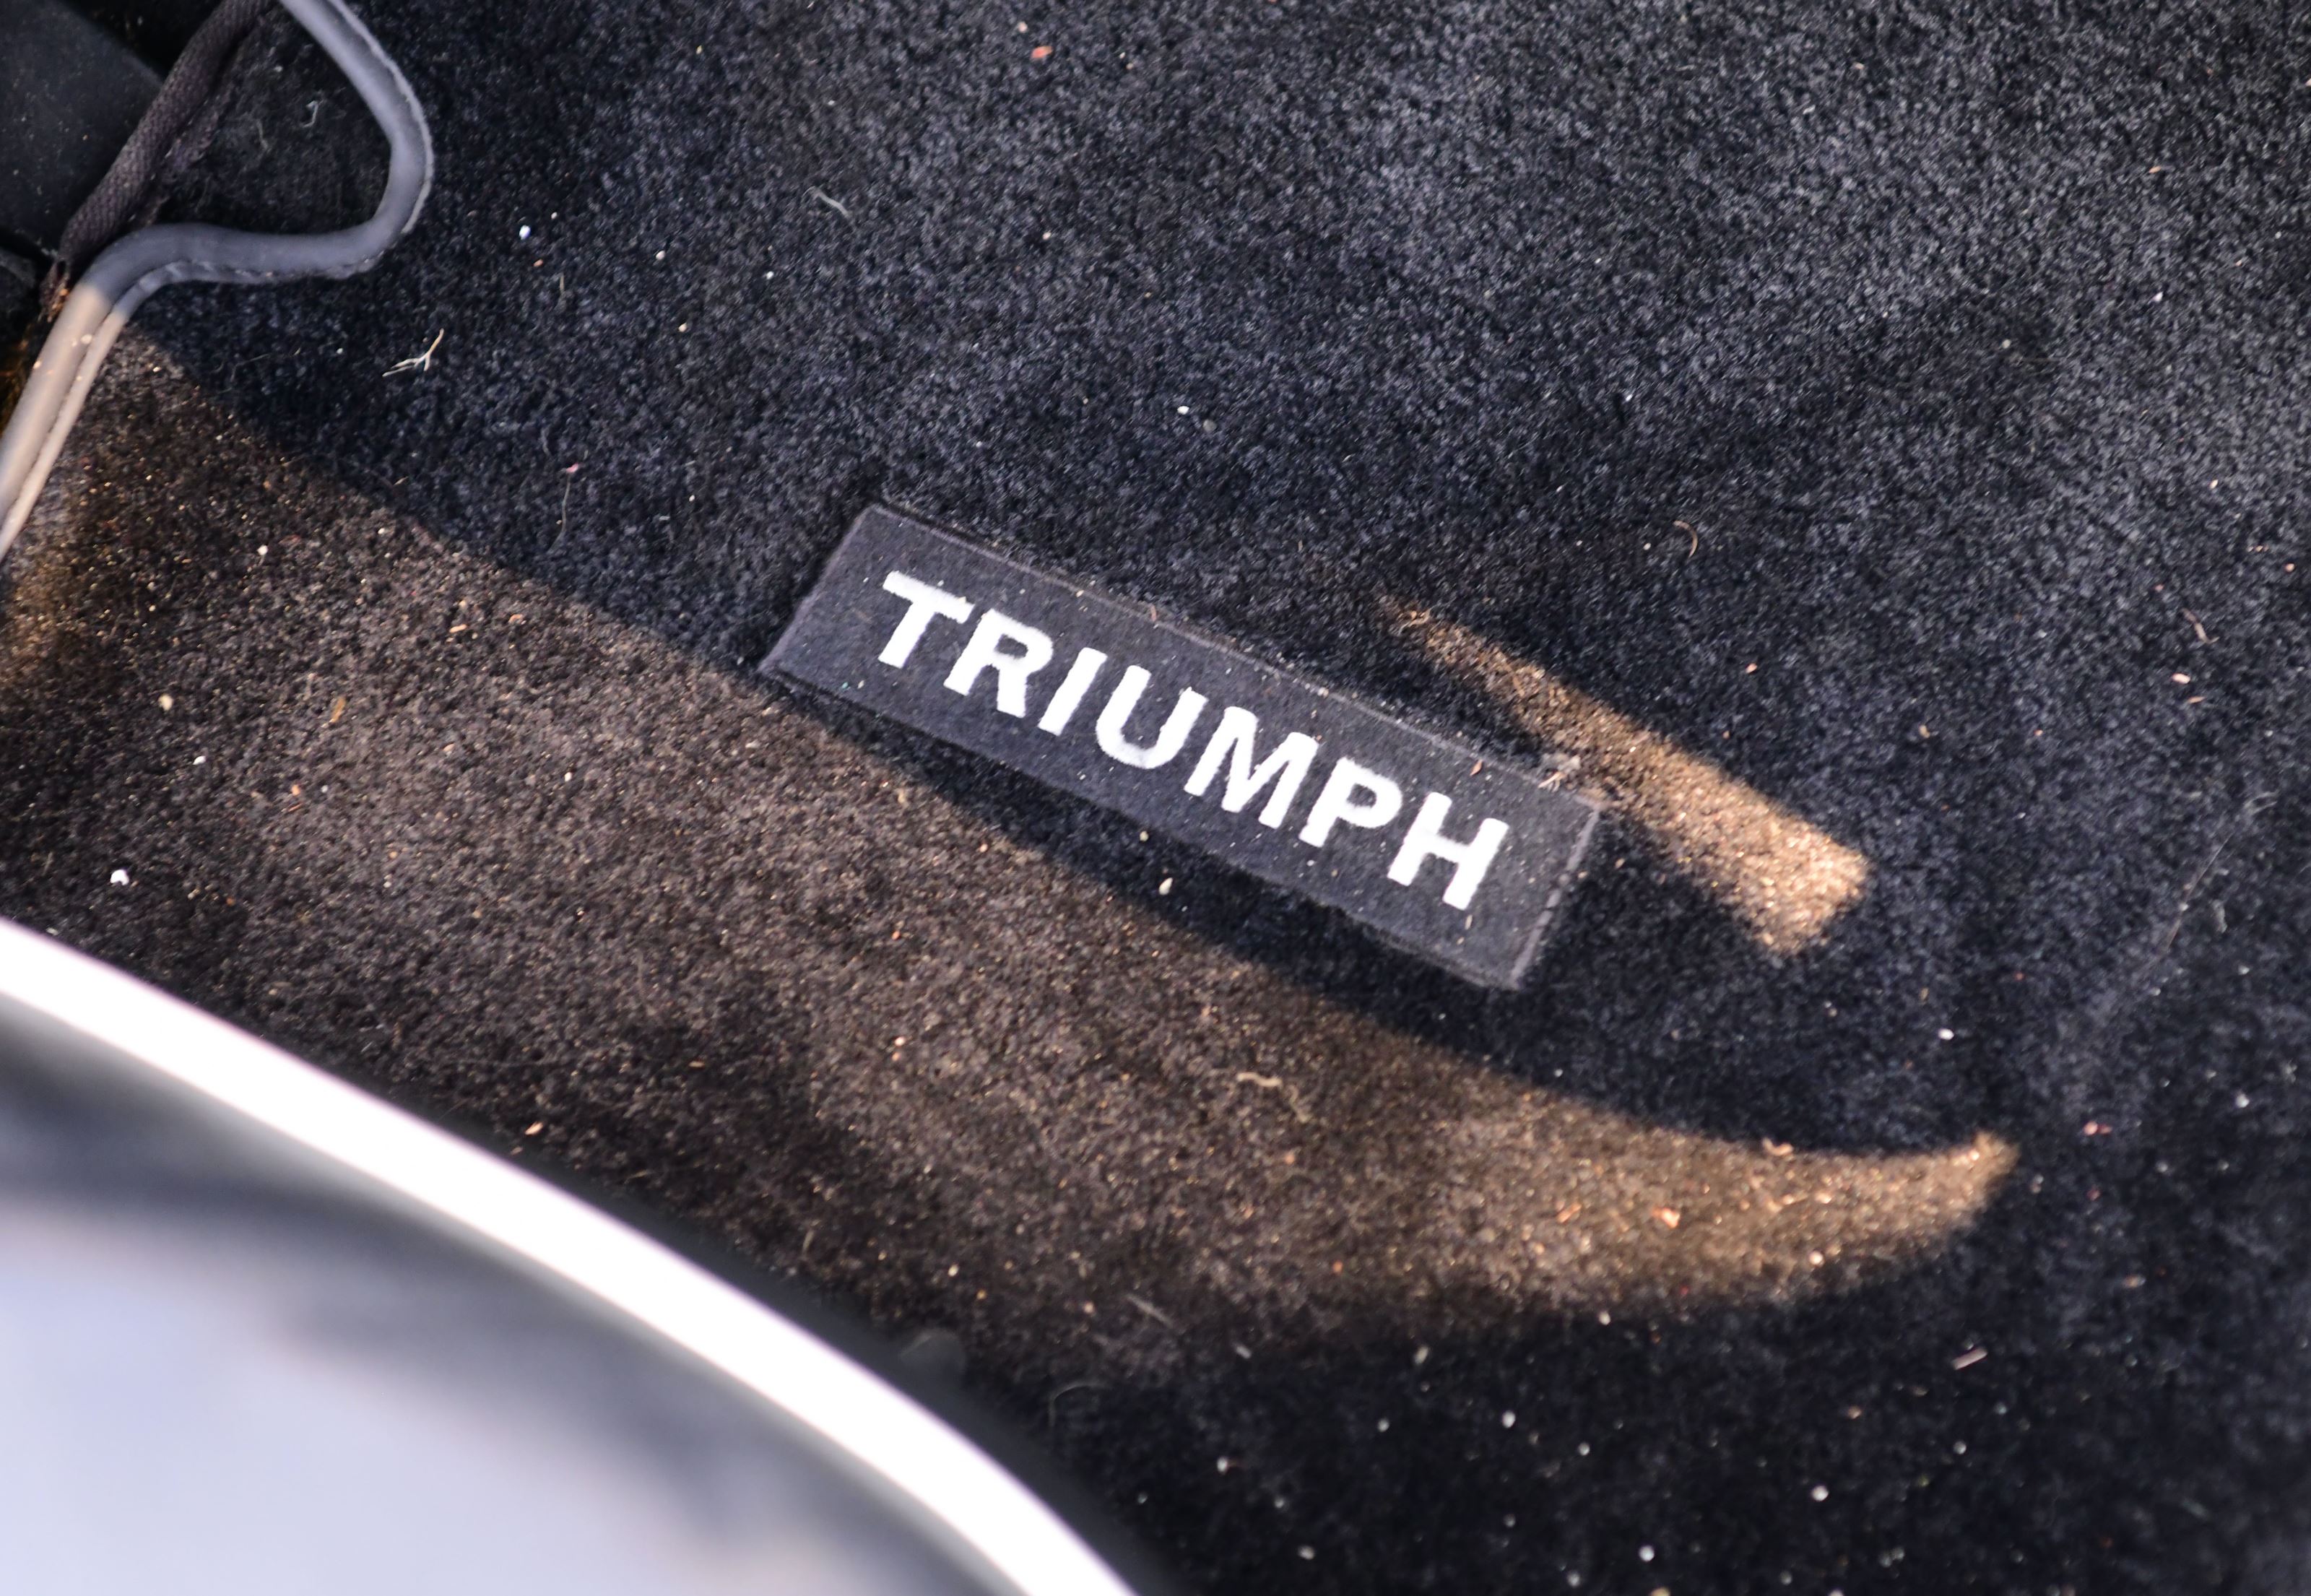 Triumph tr4 kocrpvoejlcawghr6zlze